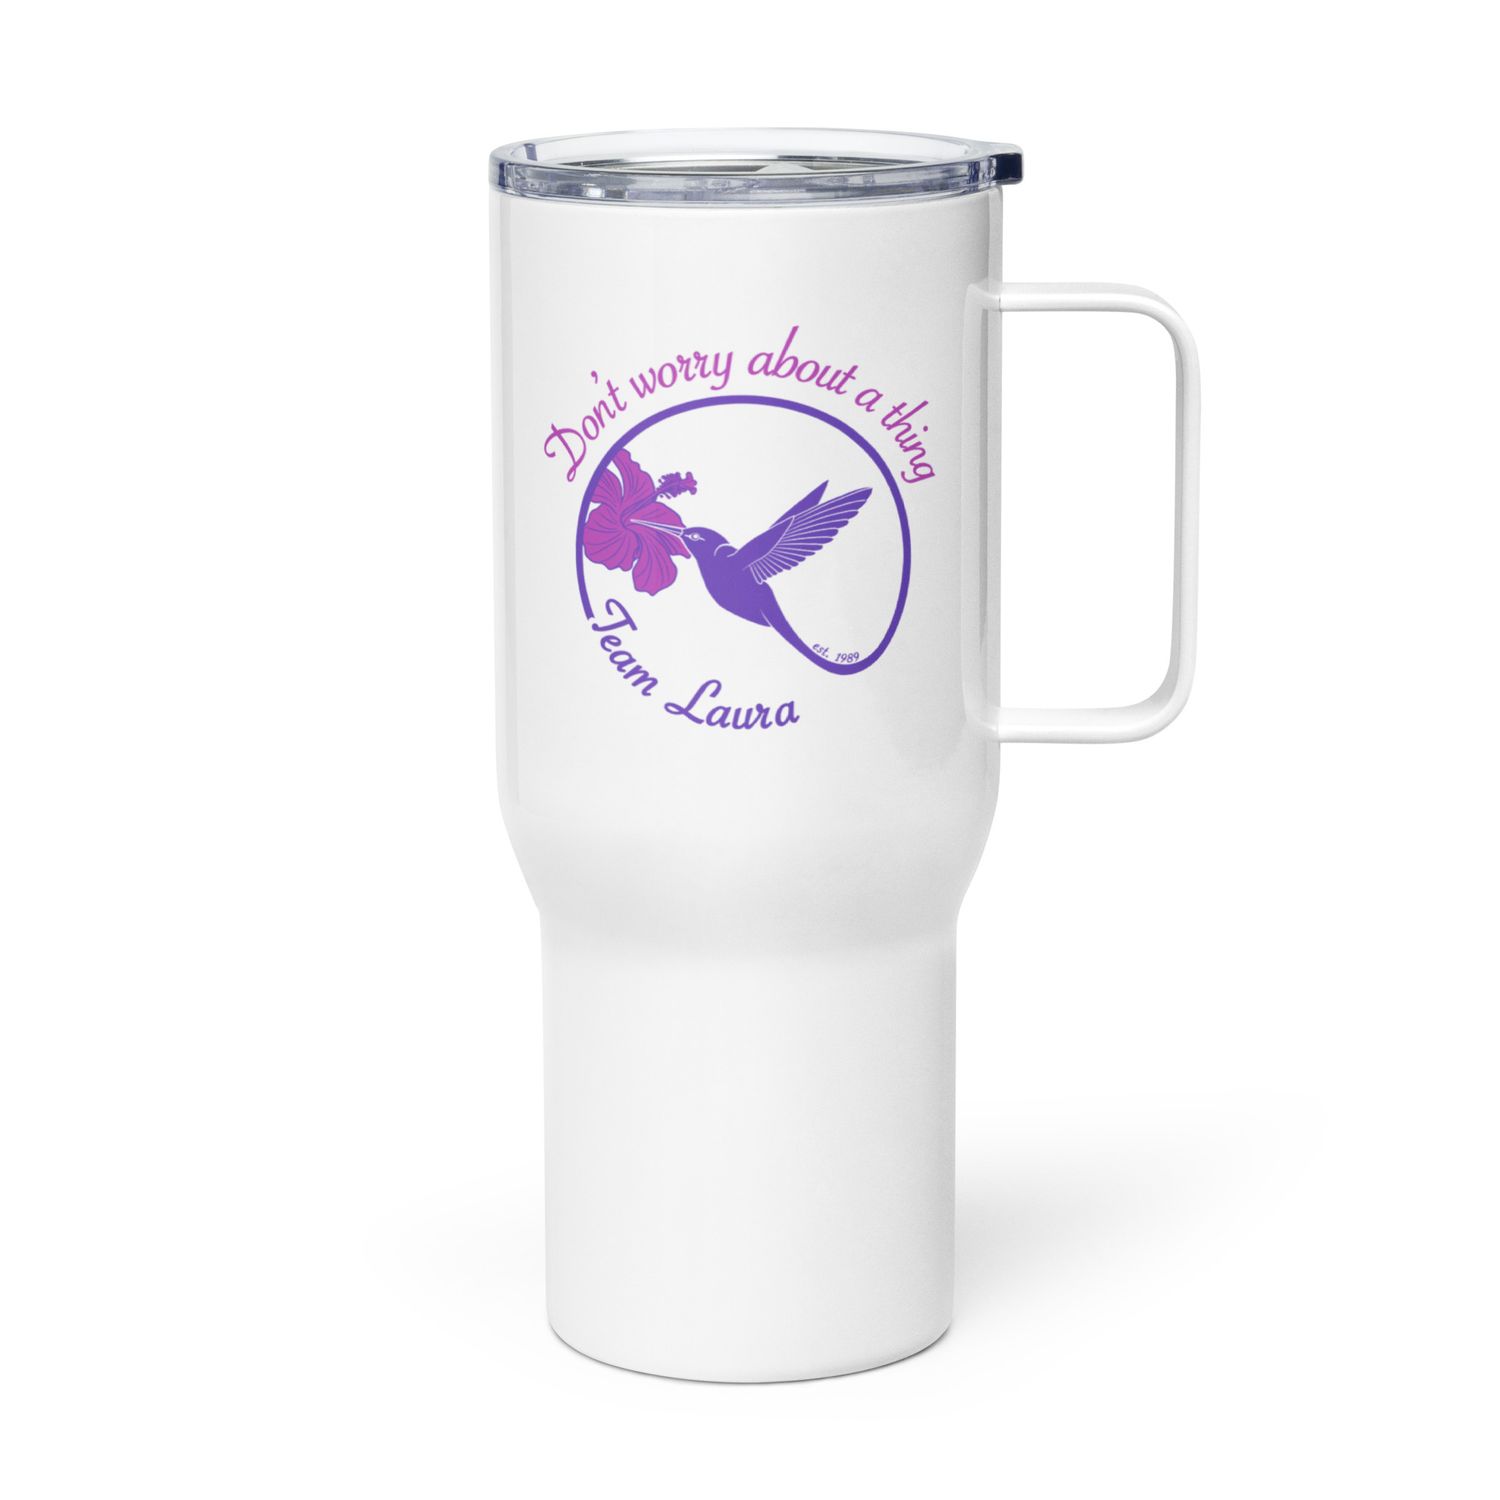 Team Laura Line - Travel mug with a handle